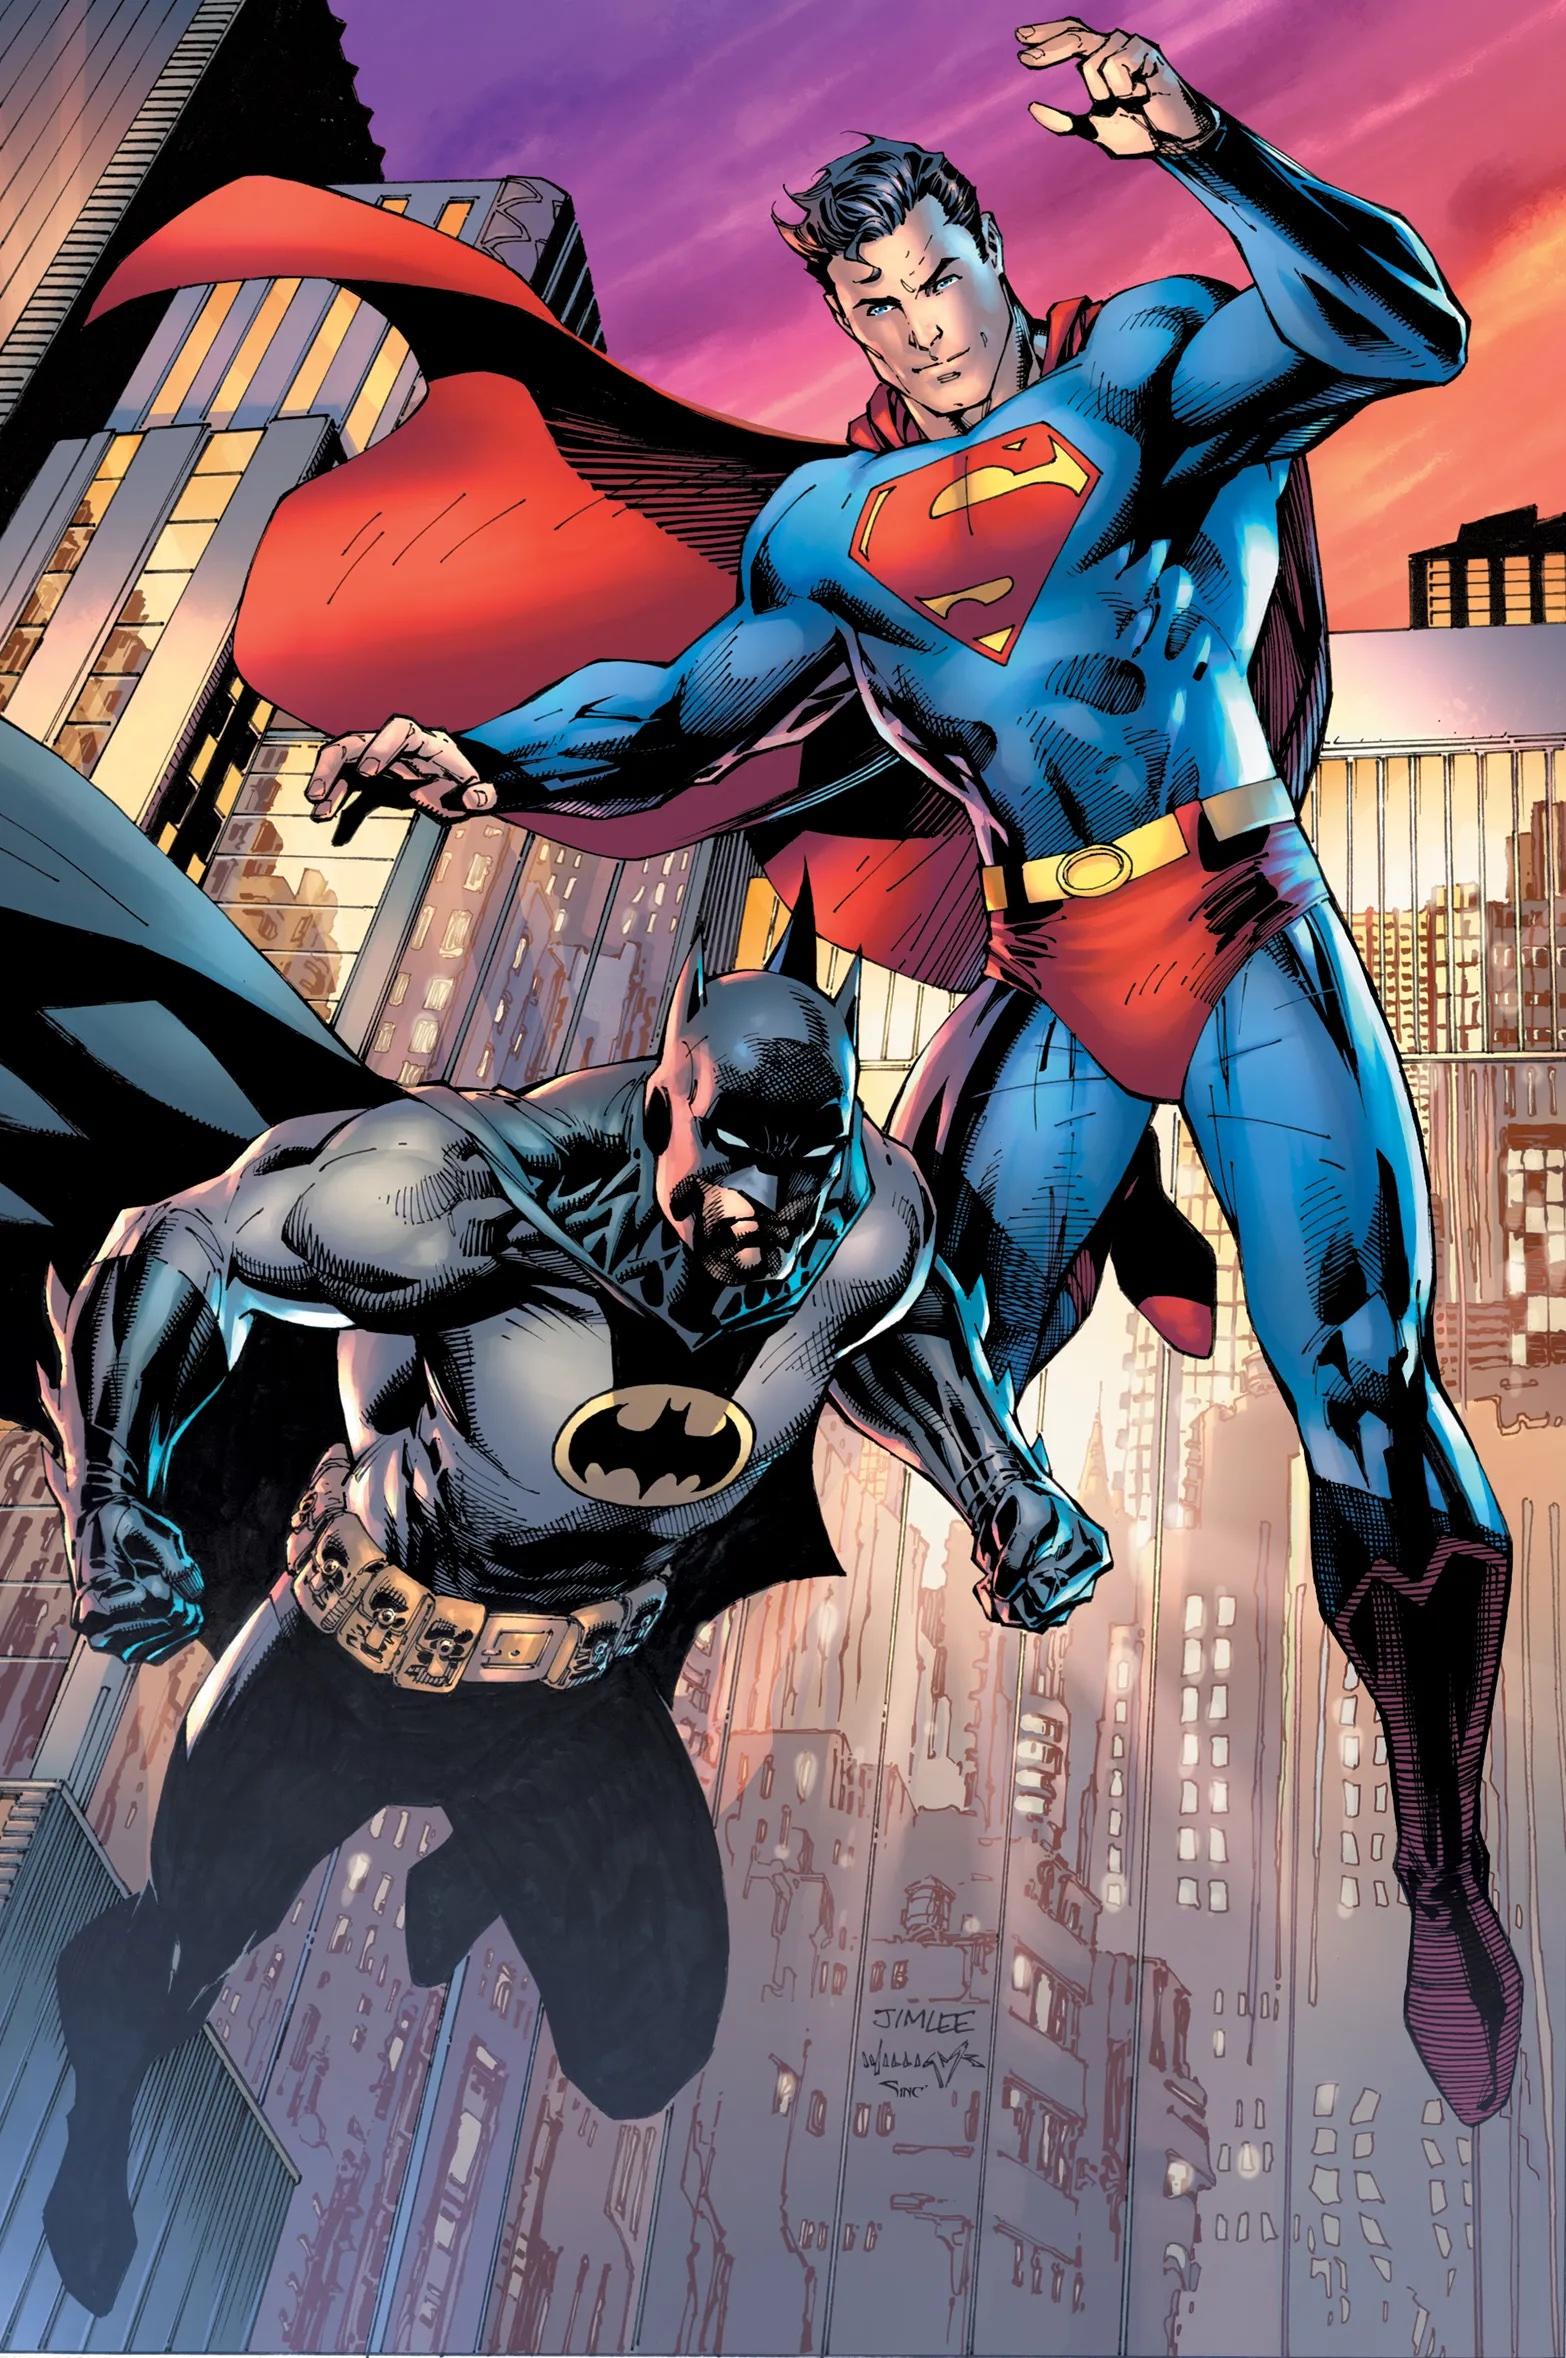 batman-superman-worlds-finest-cv1-jim-lee-open-order-variant.jpg